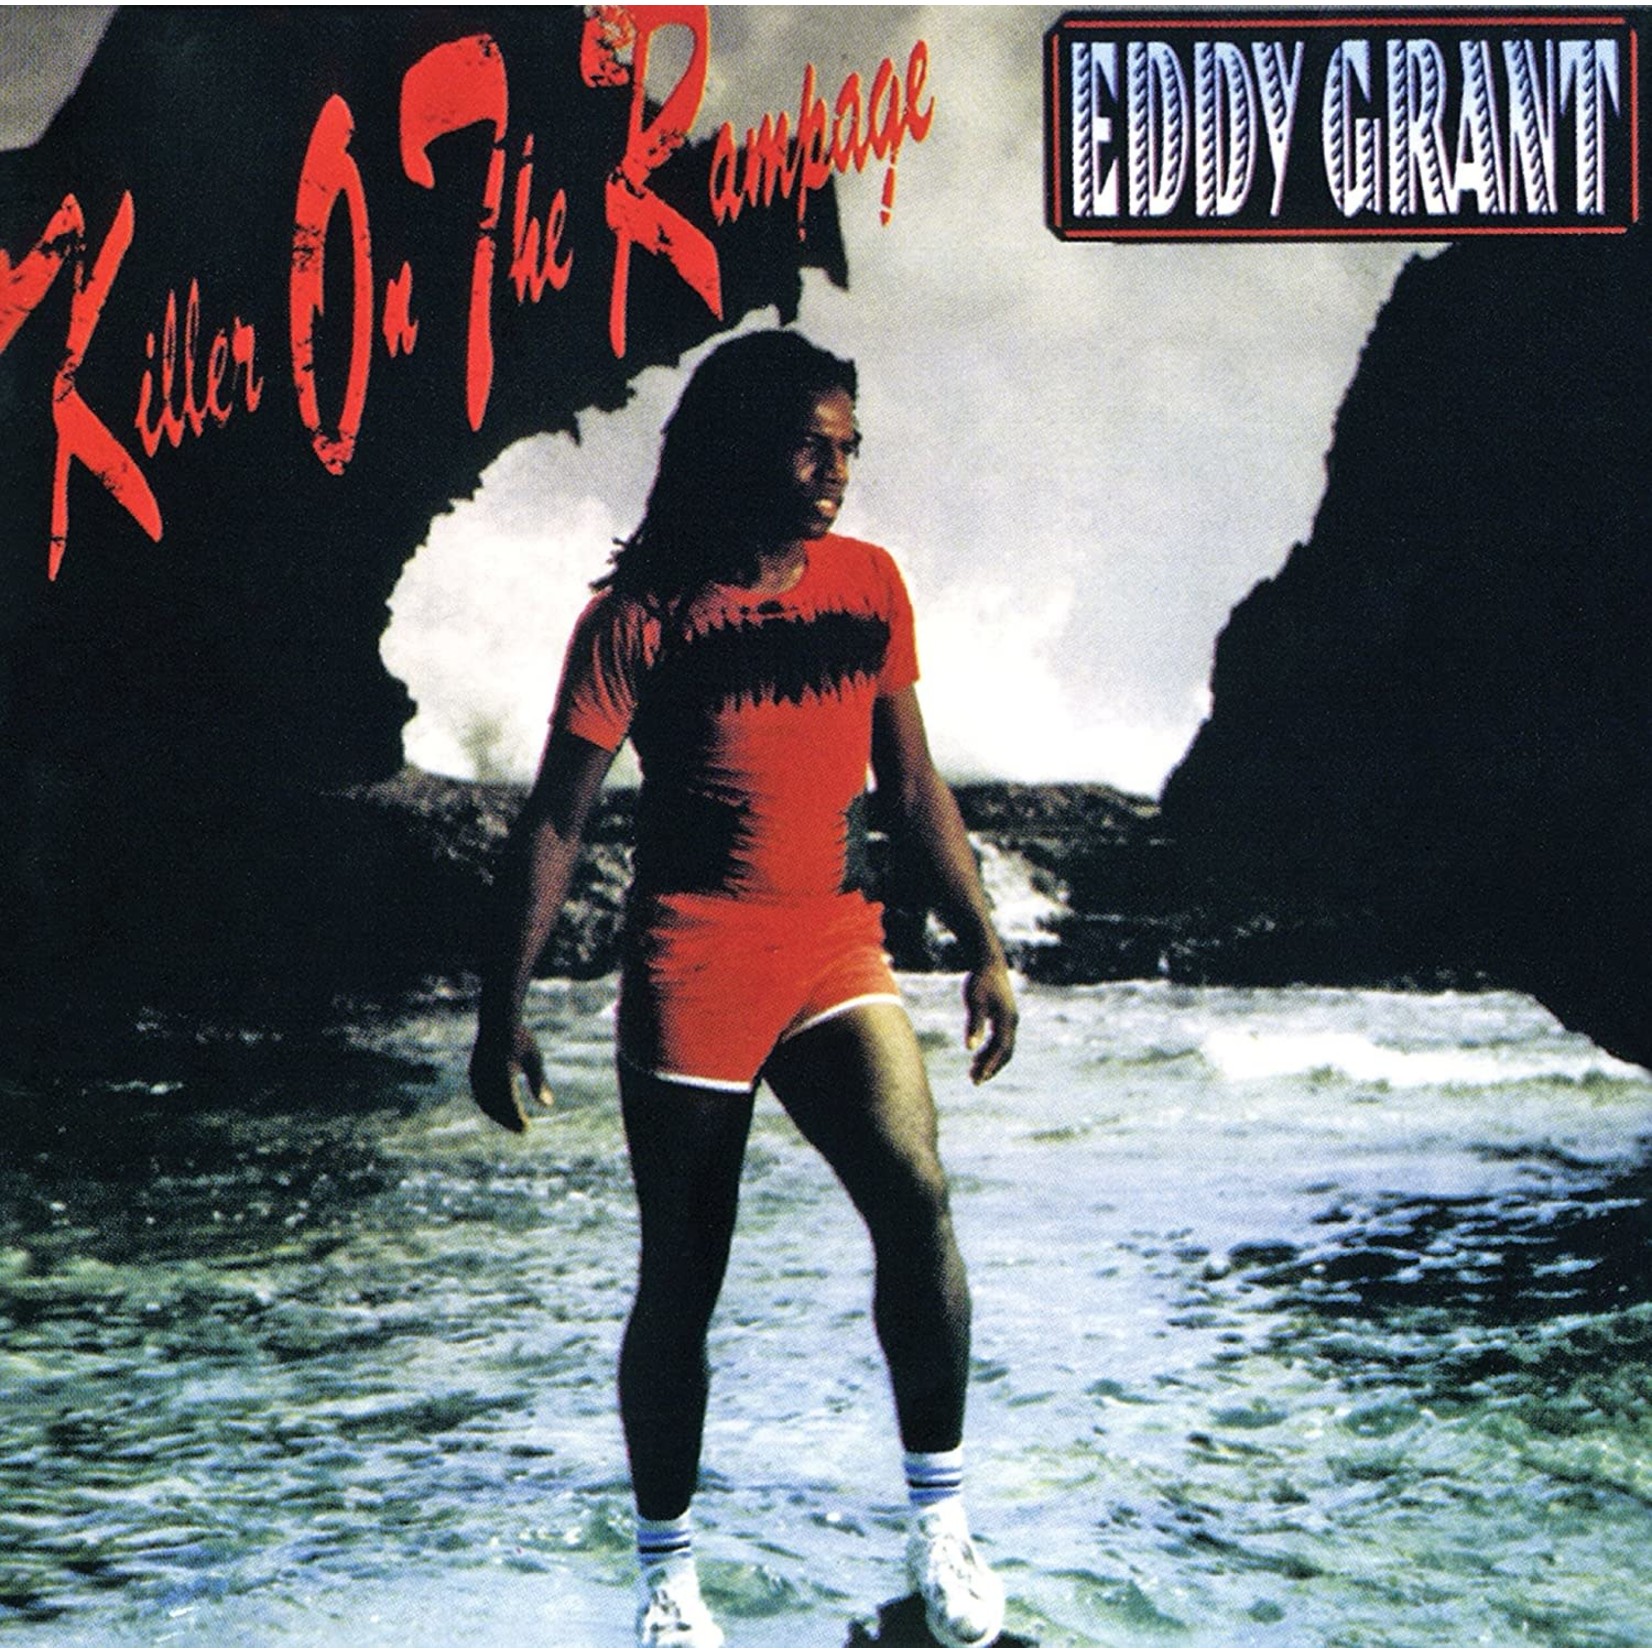 [Vintage] Eddy Grant - Killer on the Rampage